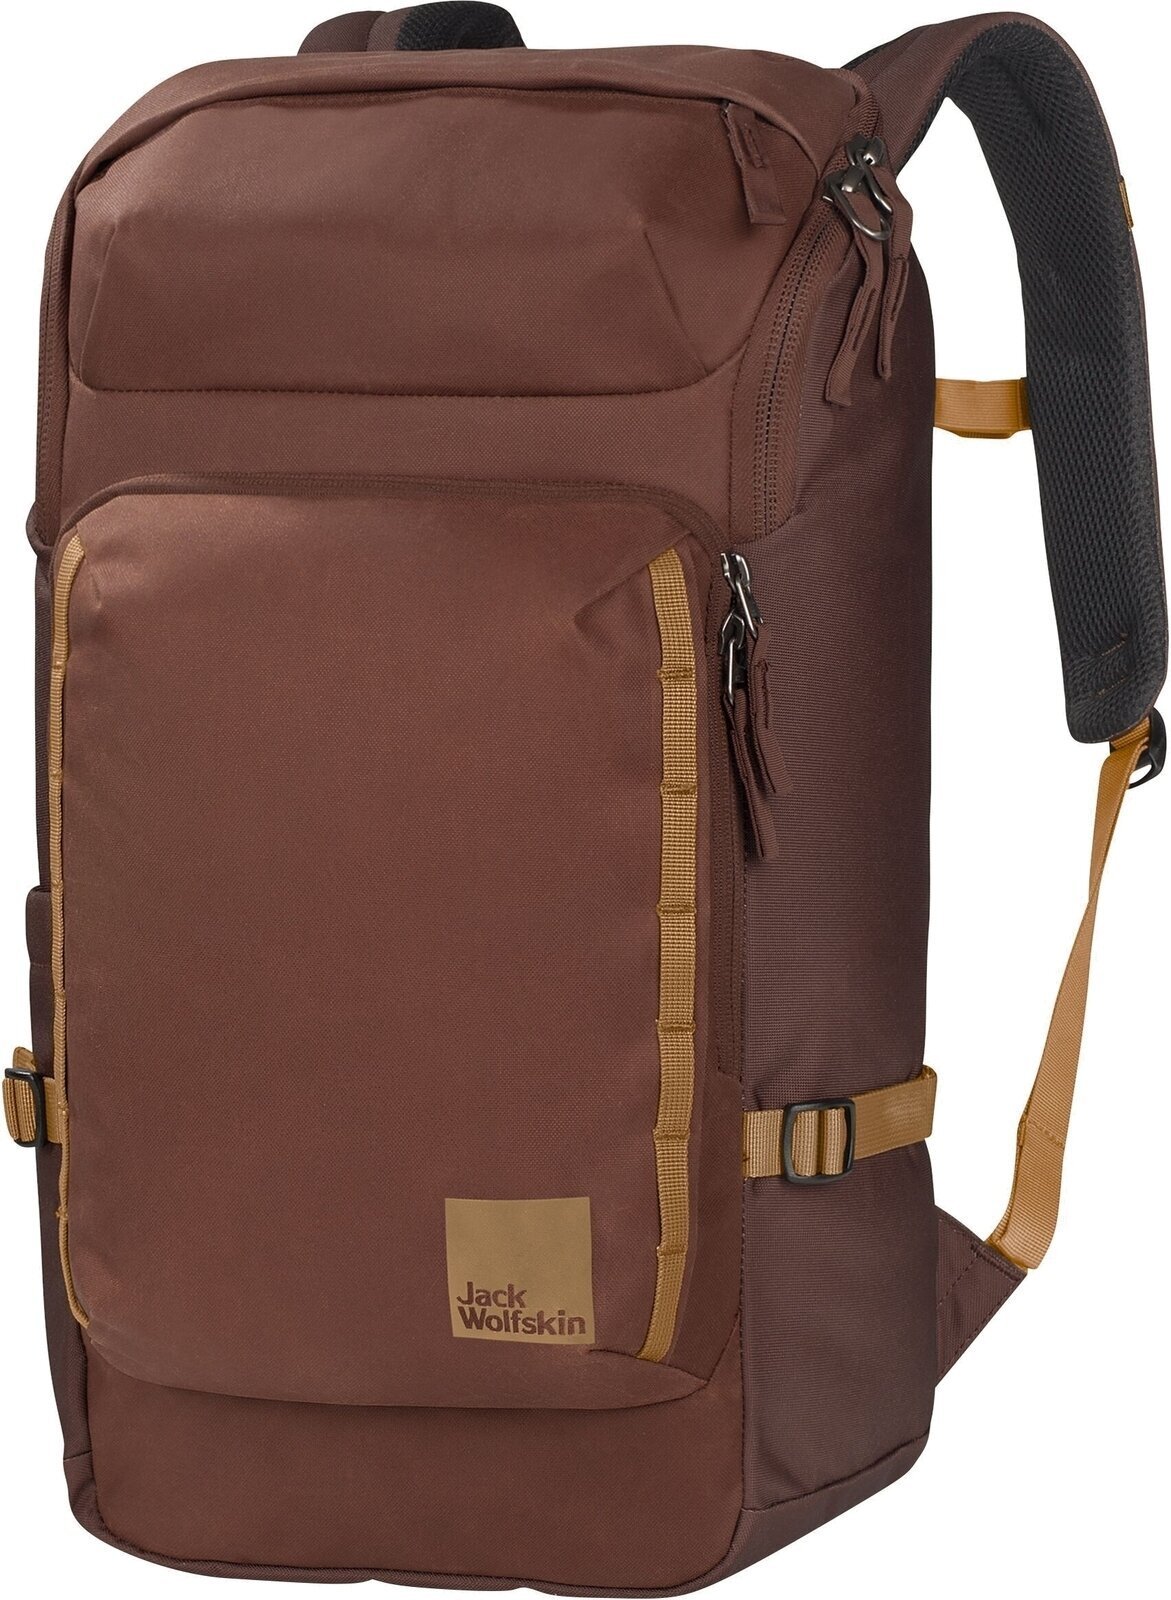 Lifestyle Backpack / Bag Jack Wolfskin Dachsberg Dark Mahogany Backpack